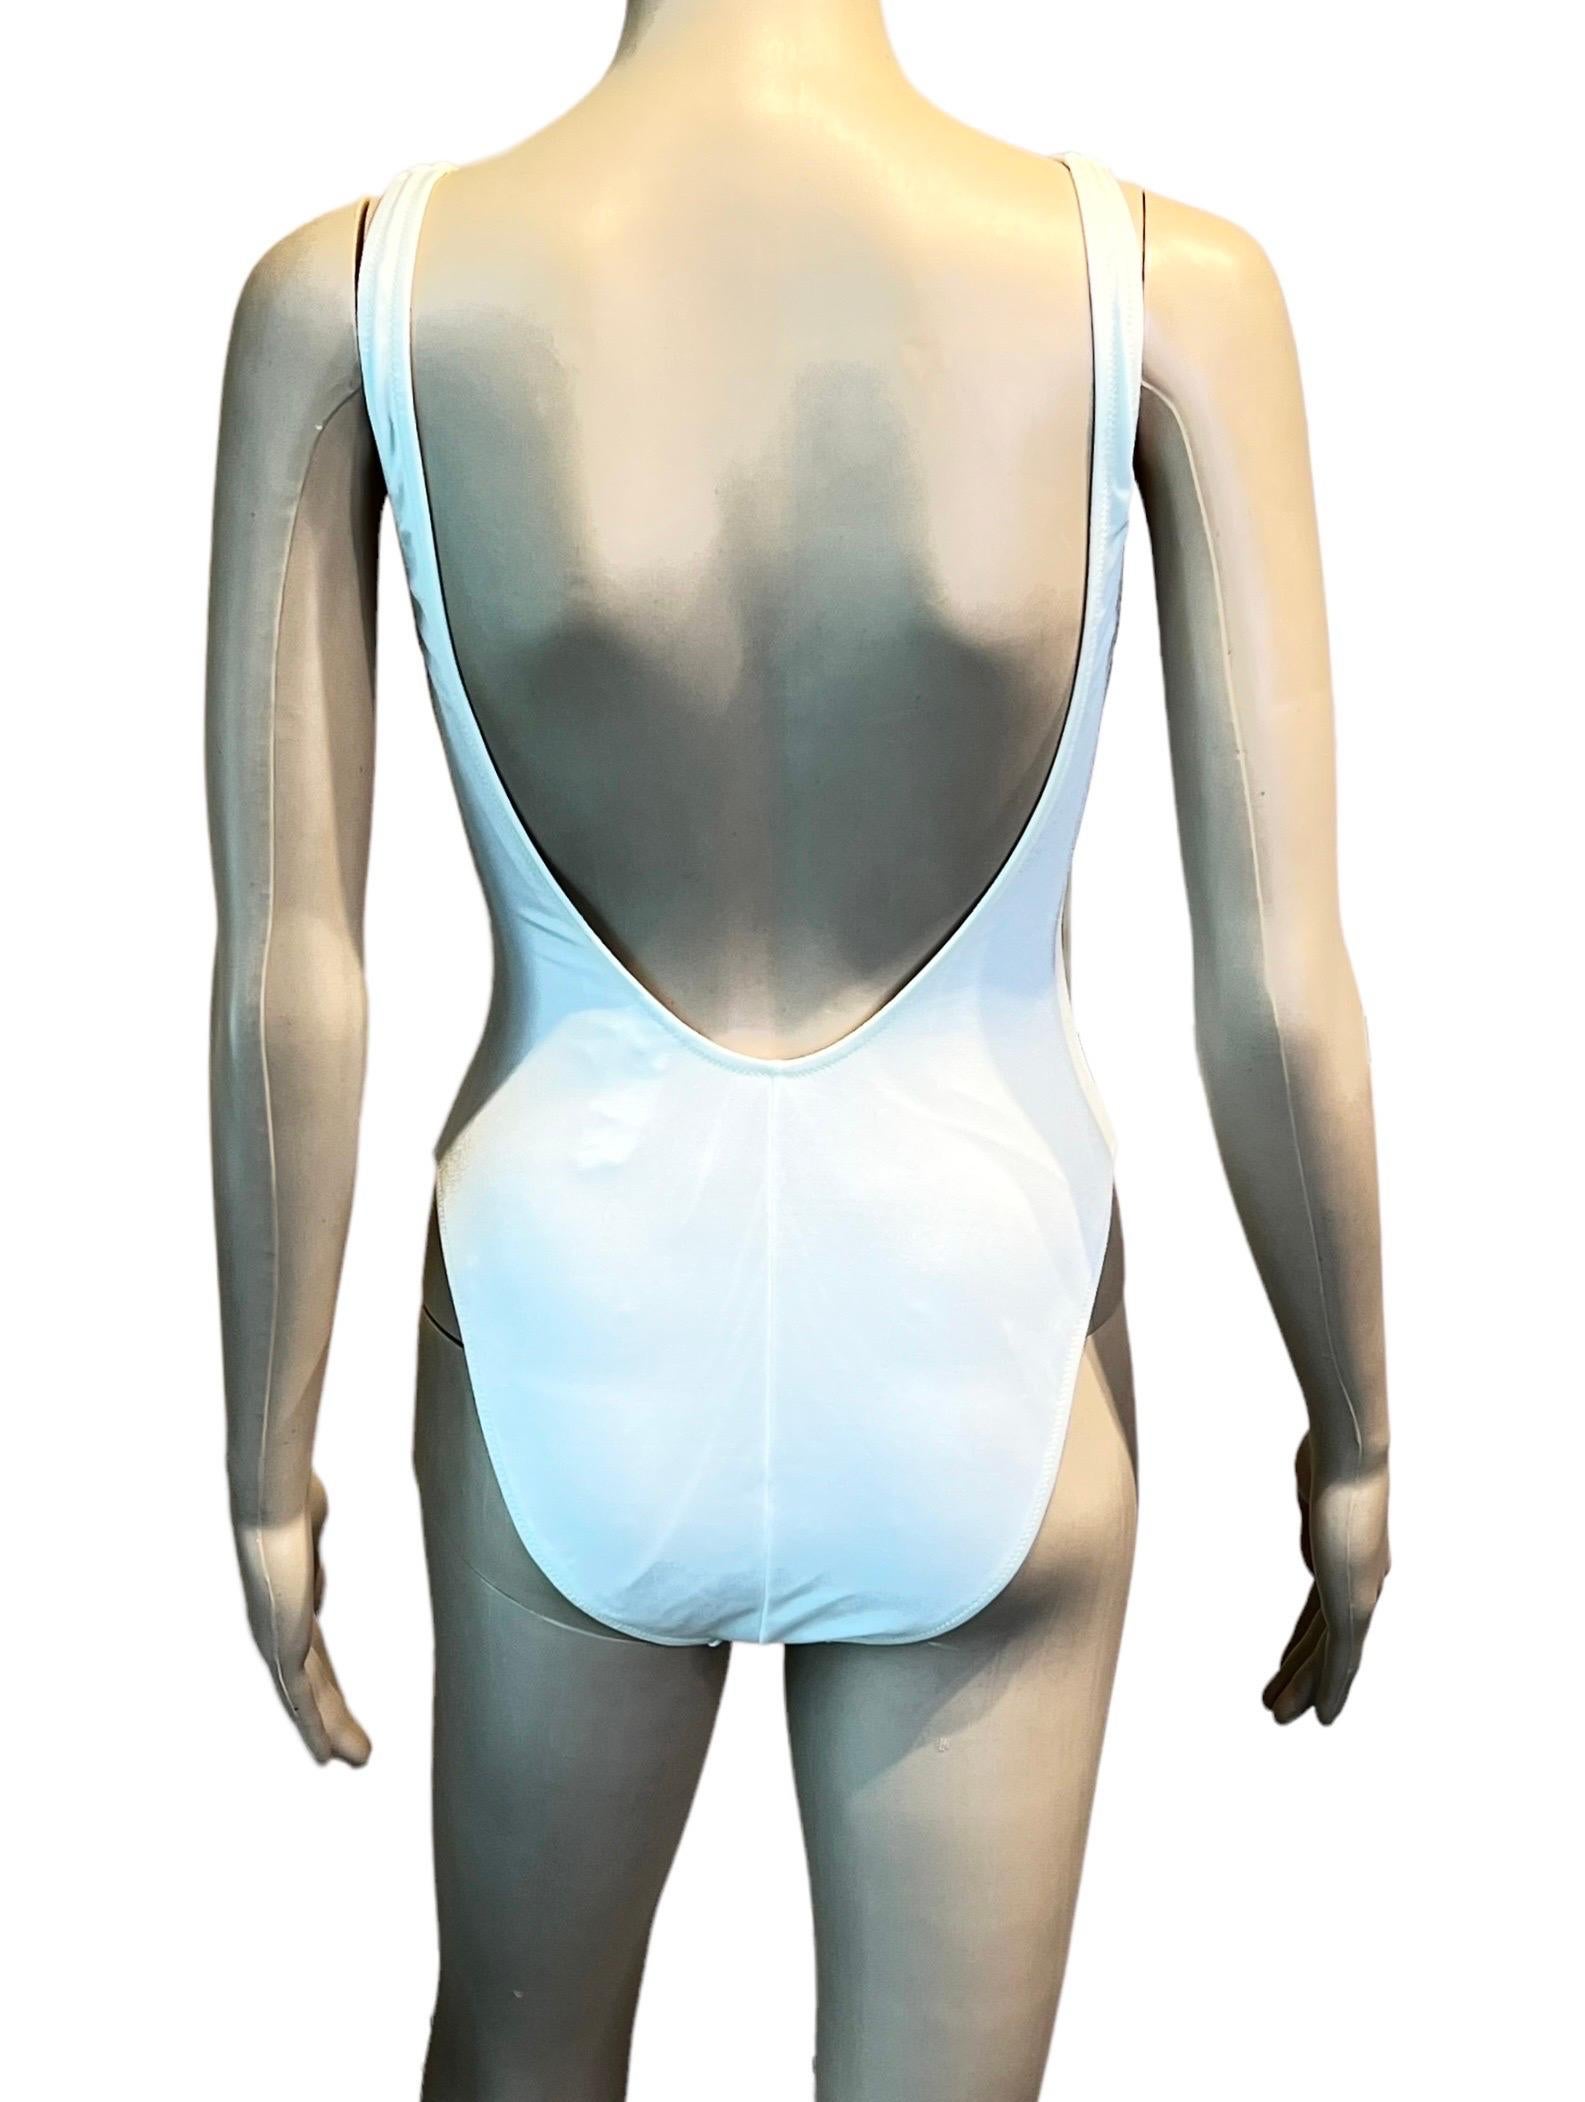 Gianni Versace S/S 1996 Vintage Crystal Zipper White Bodysuit Swimwear Swimsuit For Sale 3